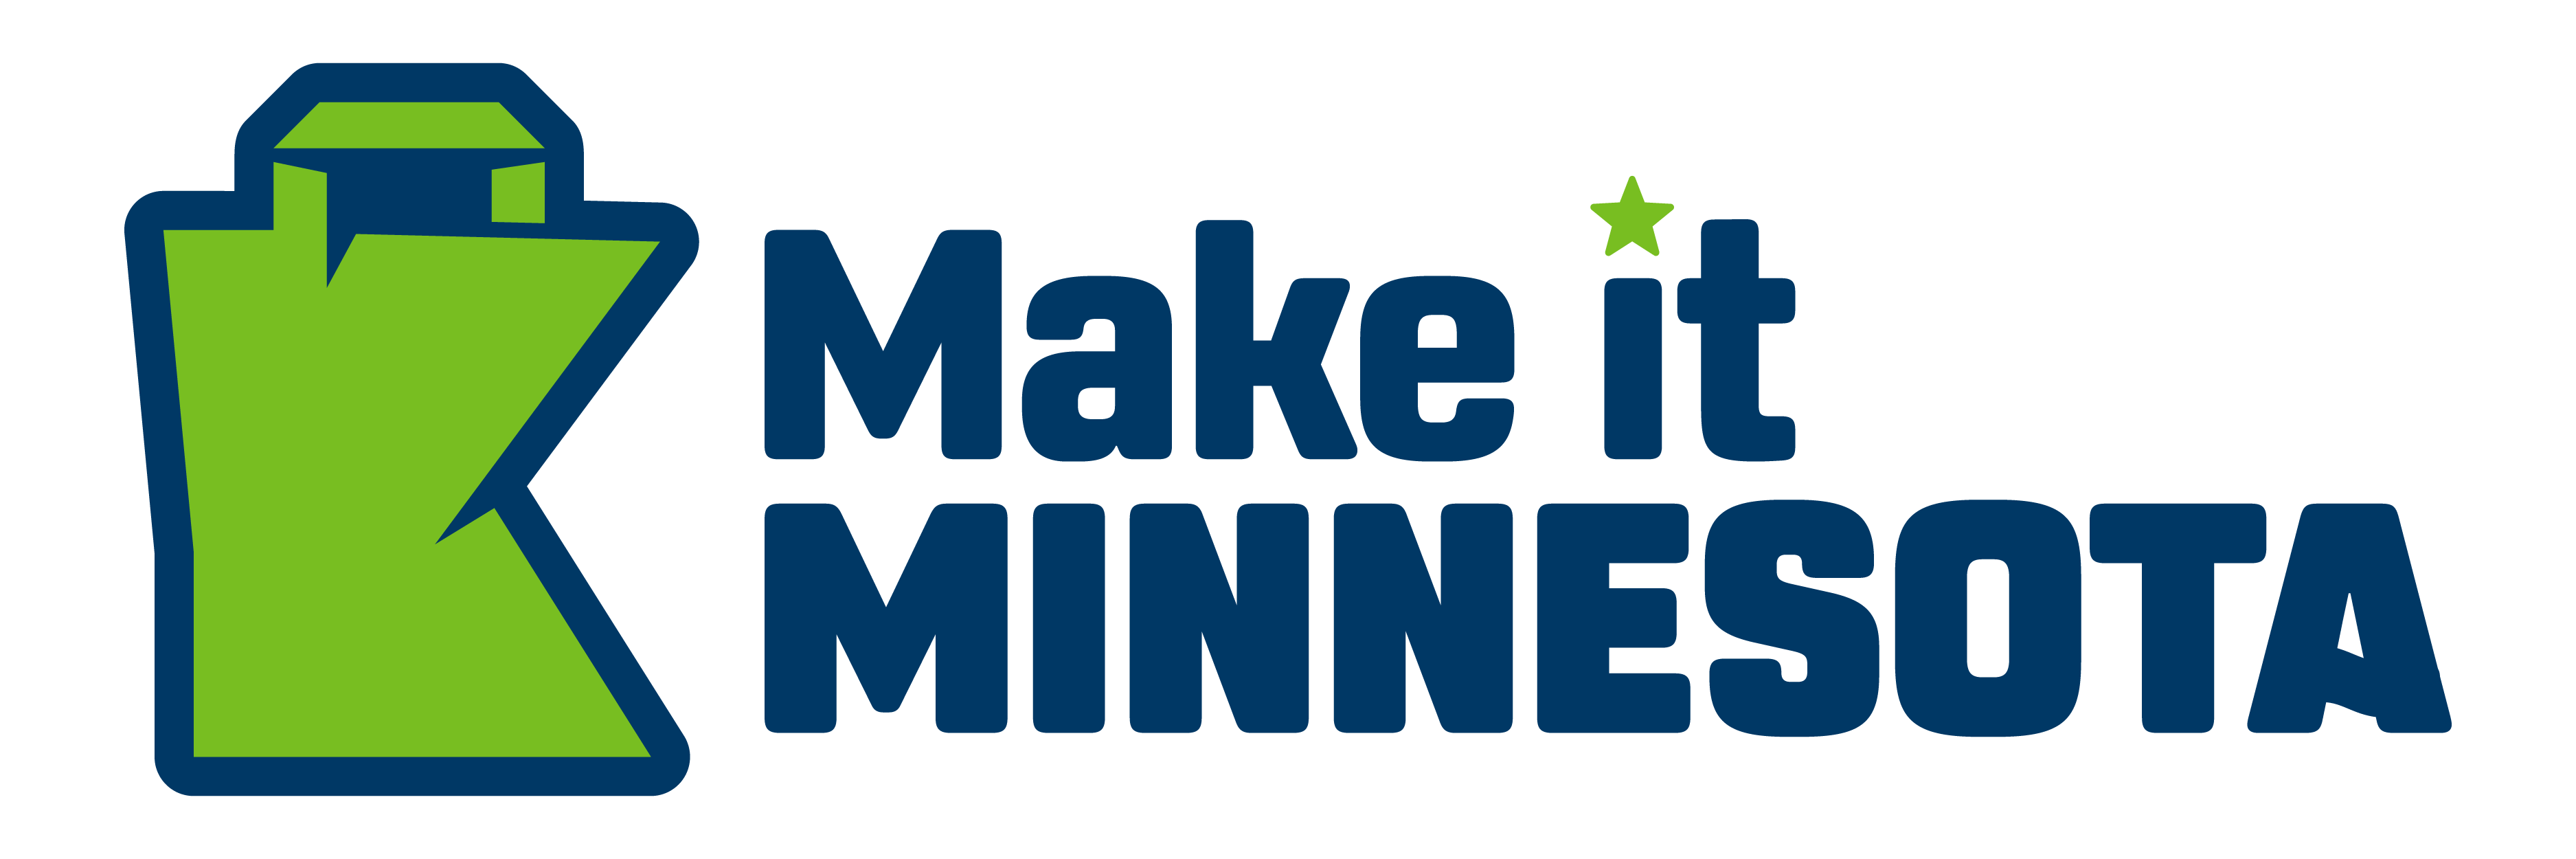 Make it Minnesota logo